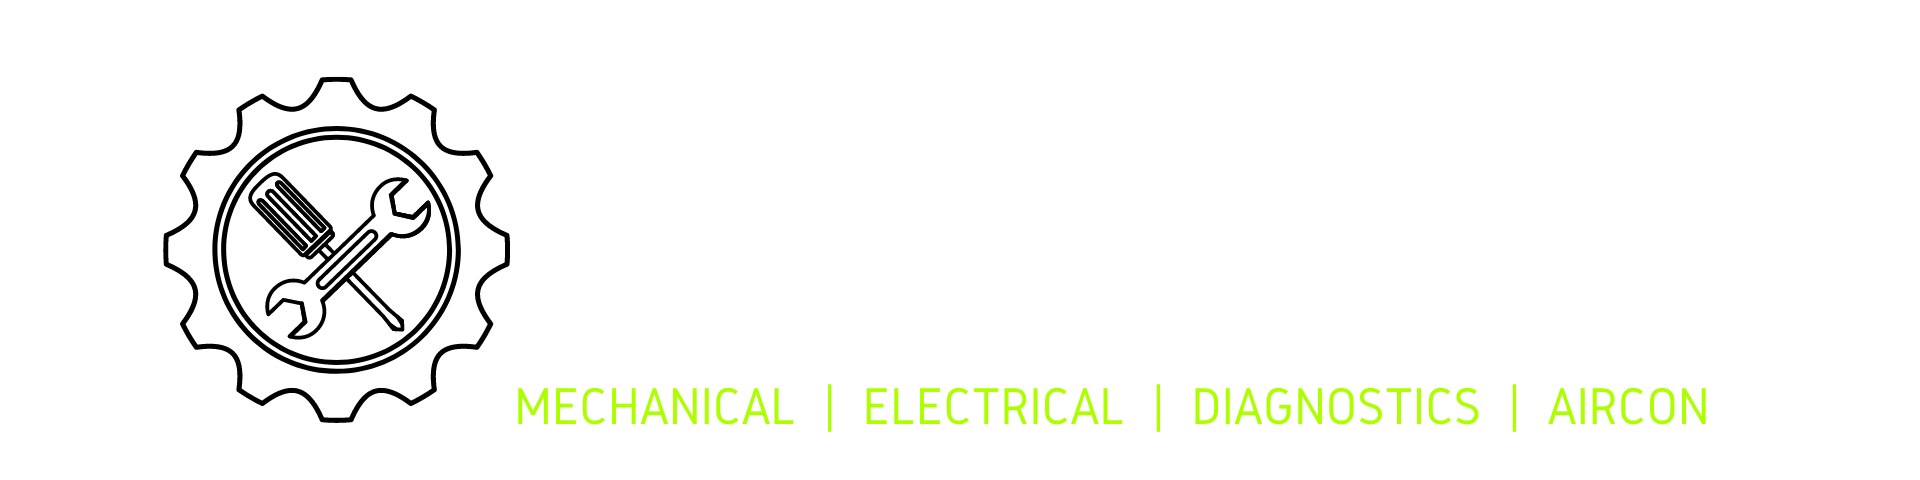 MEDA Mechanical 